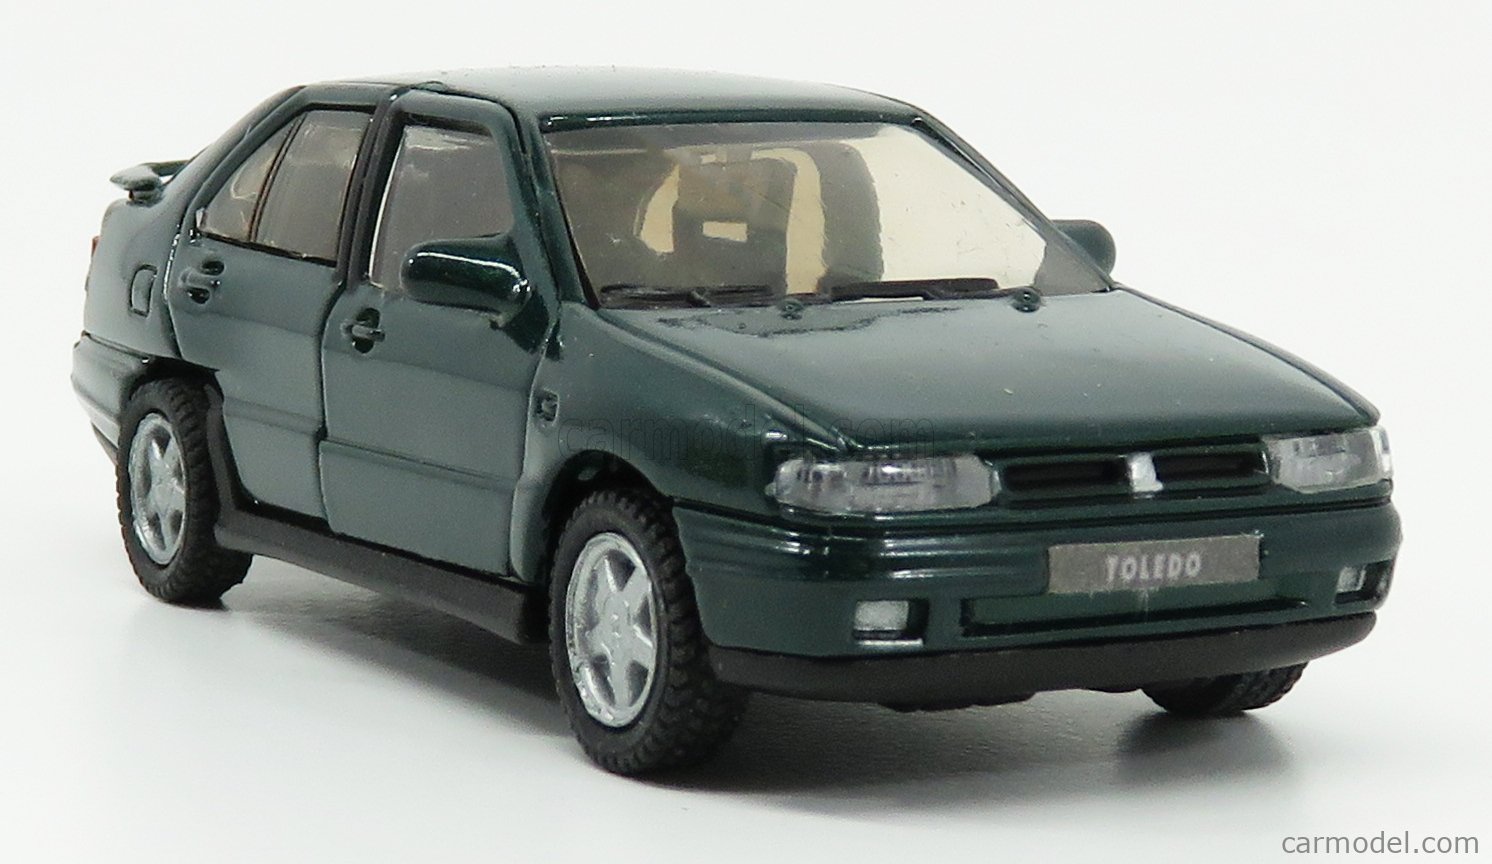 Sitzbezüge Auto für Seat Toledo I, II, III, IV (1991-2019